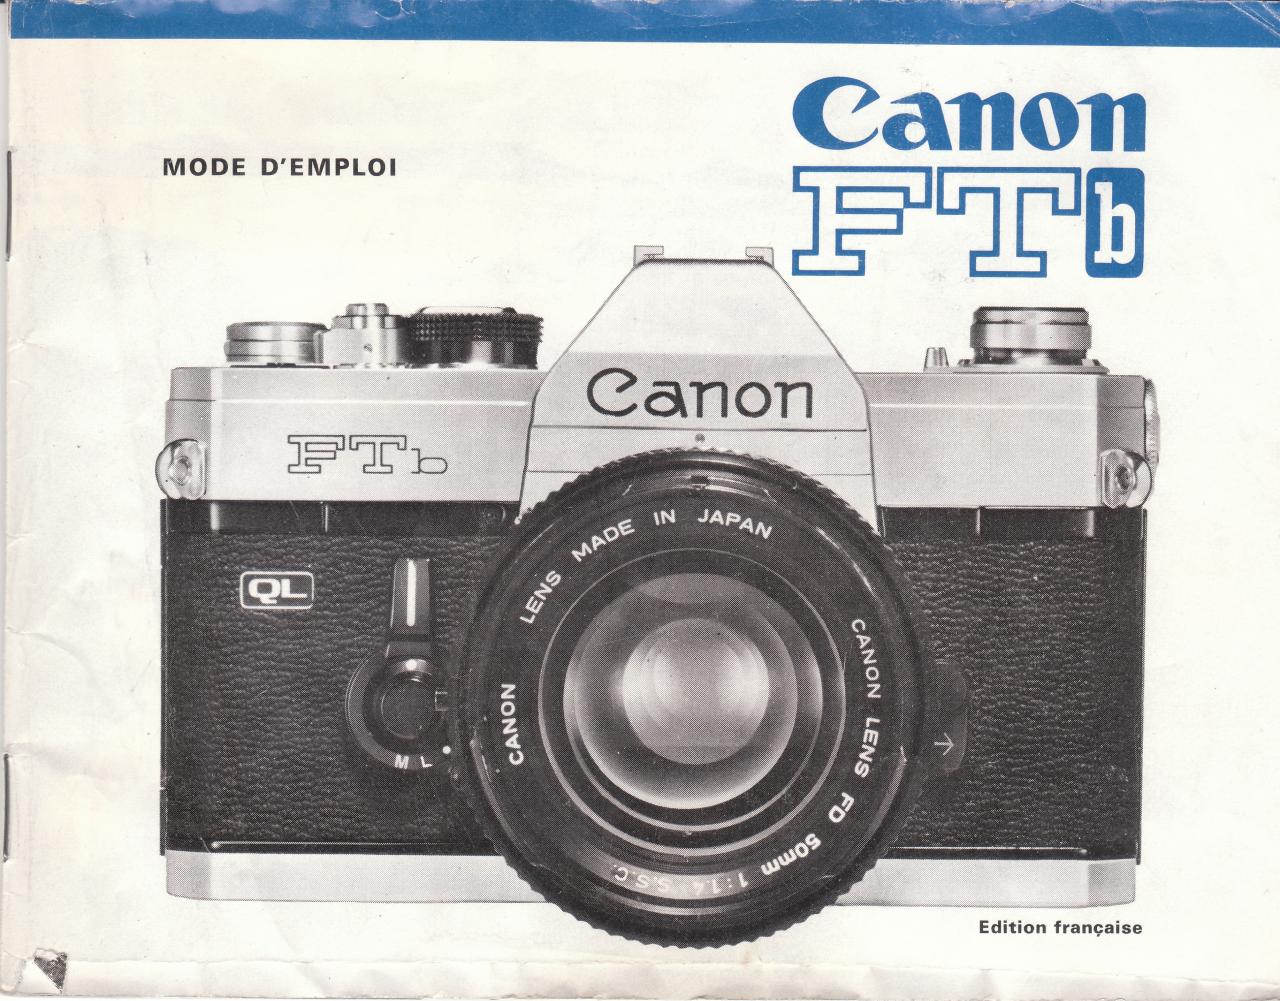 *Canon FTb QL 1973*